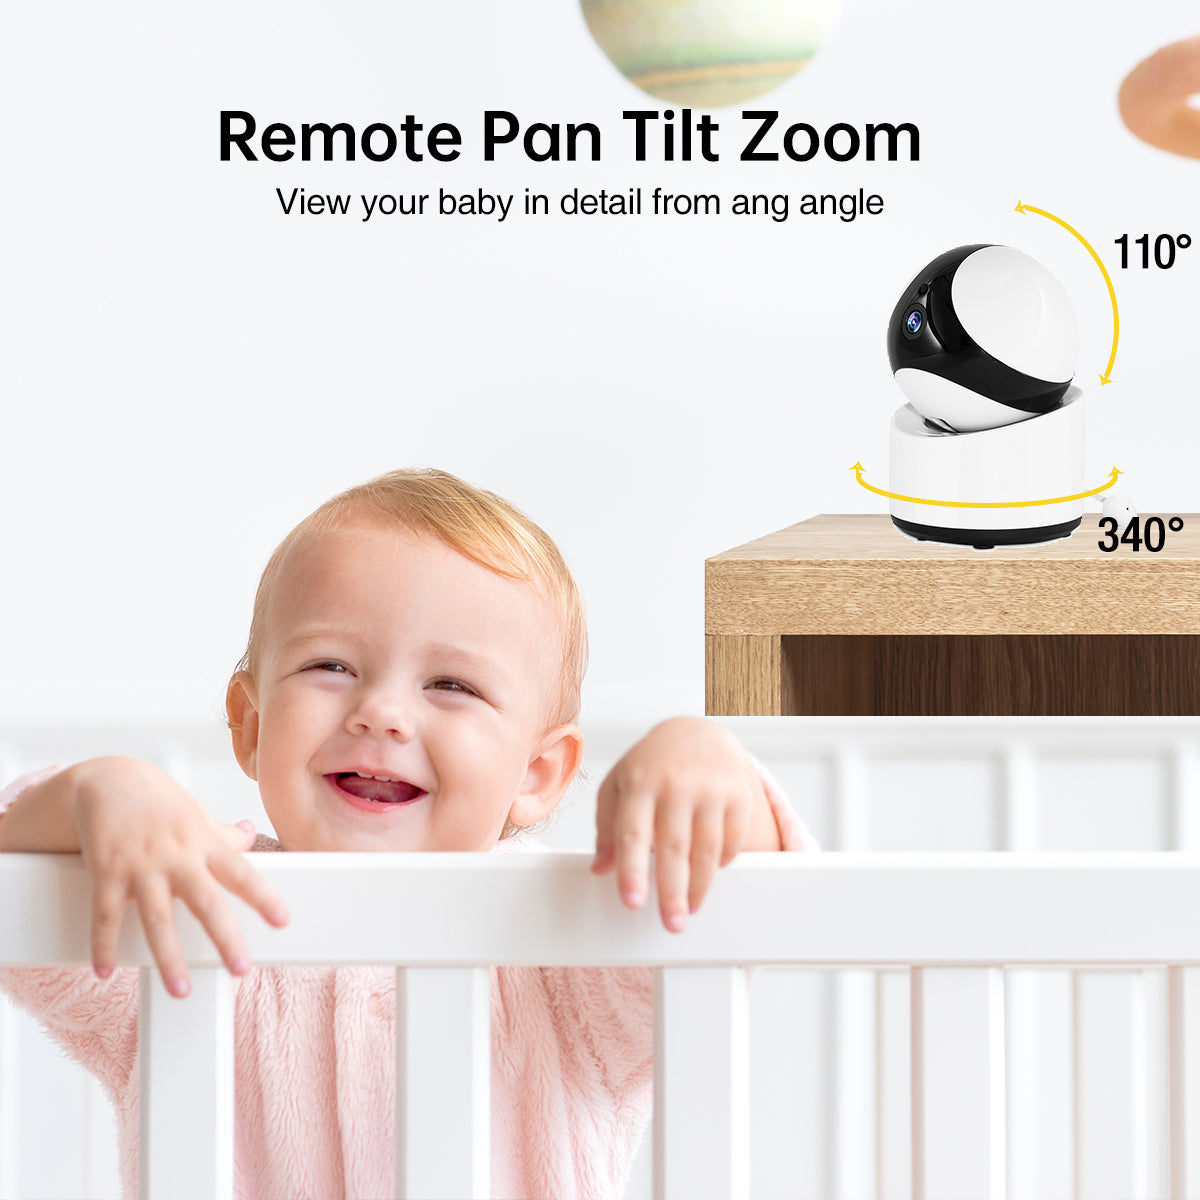 720P 5 HD Video Baby Monitor -VAVA